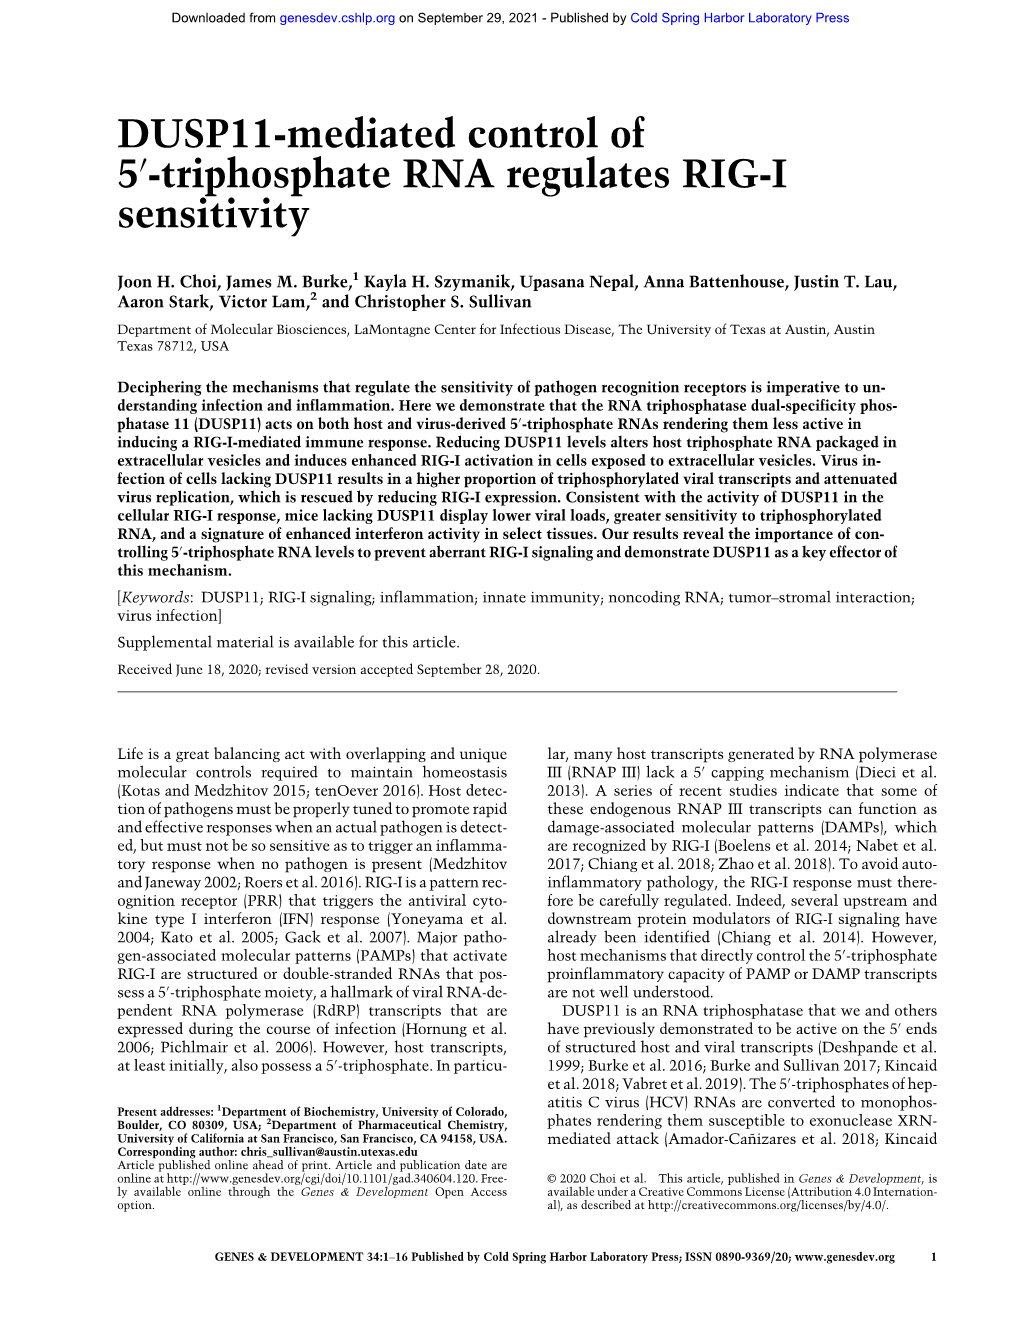 Triphosphate RNA Regulates RIG-I Sensitivity